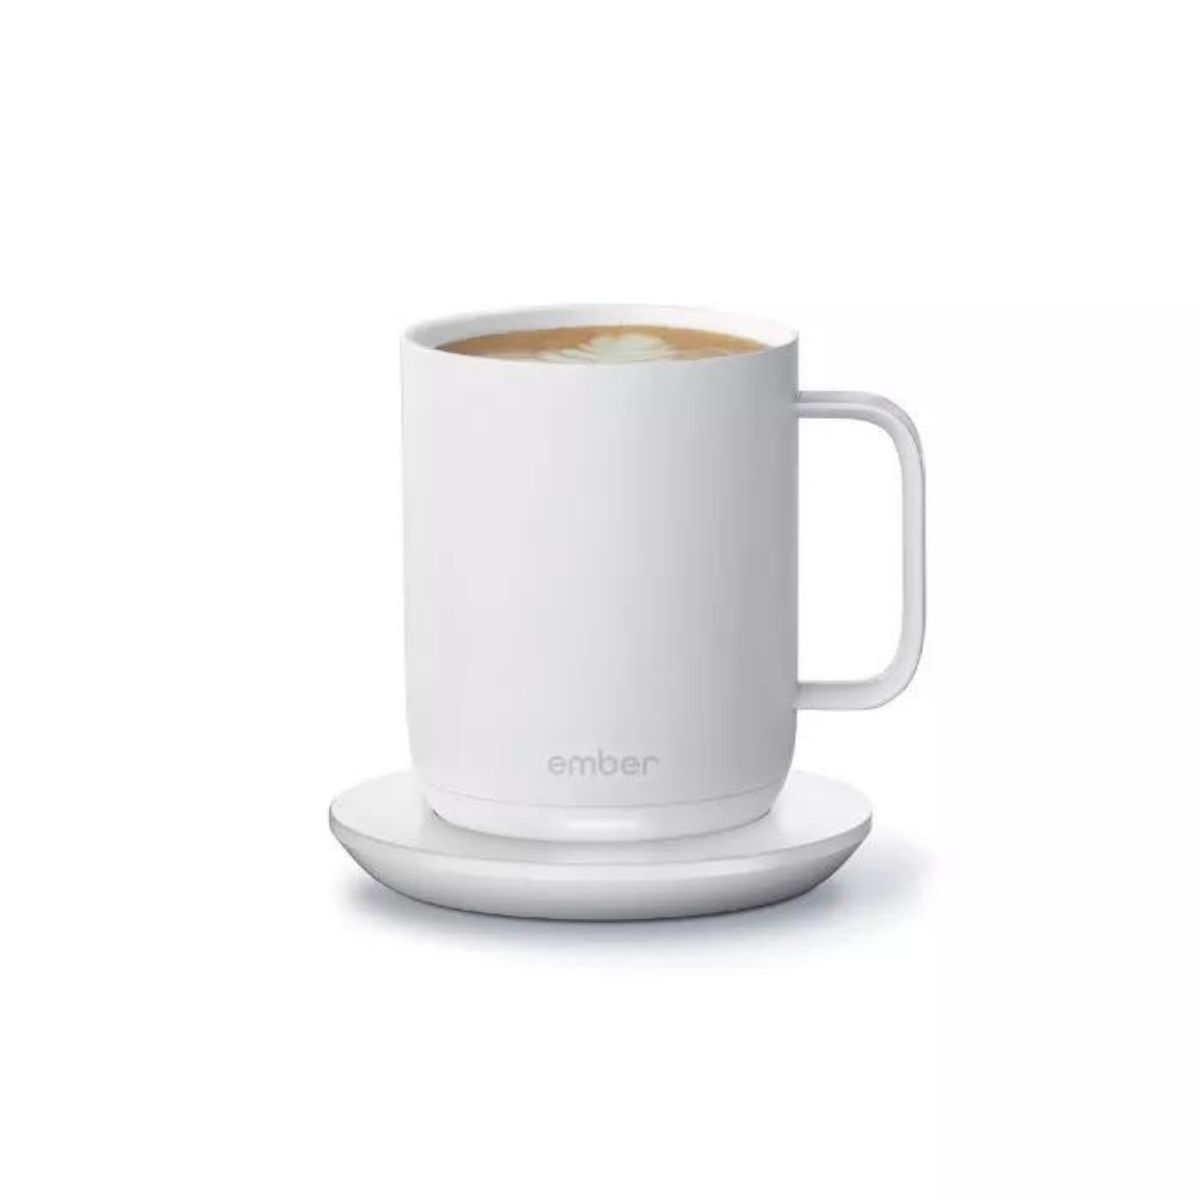 The Best Home Office Gifts Option: Ember Mug2 Temperature Control Smart Mug 10oz